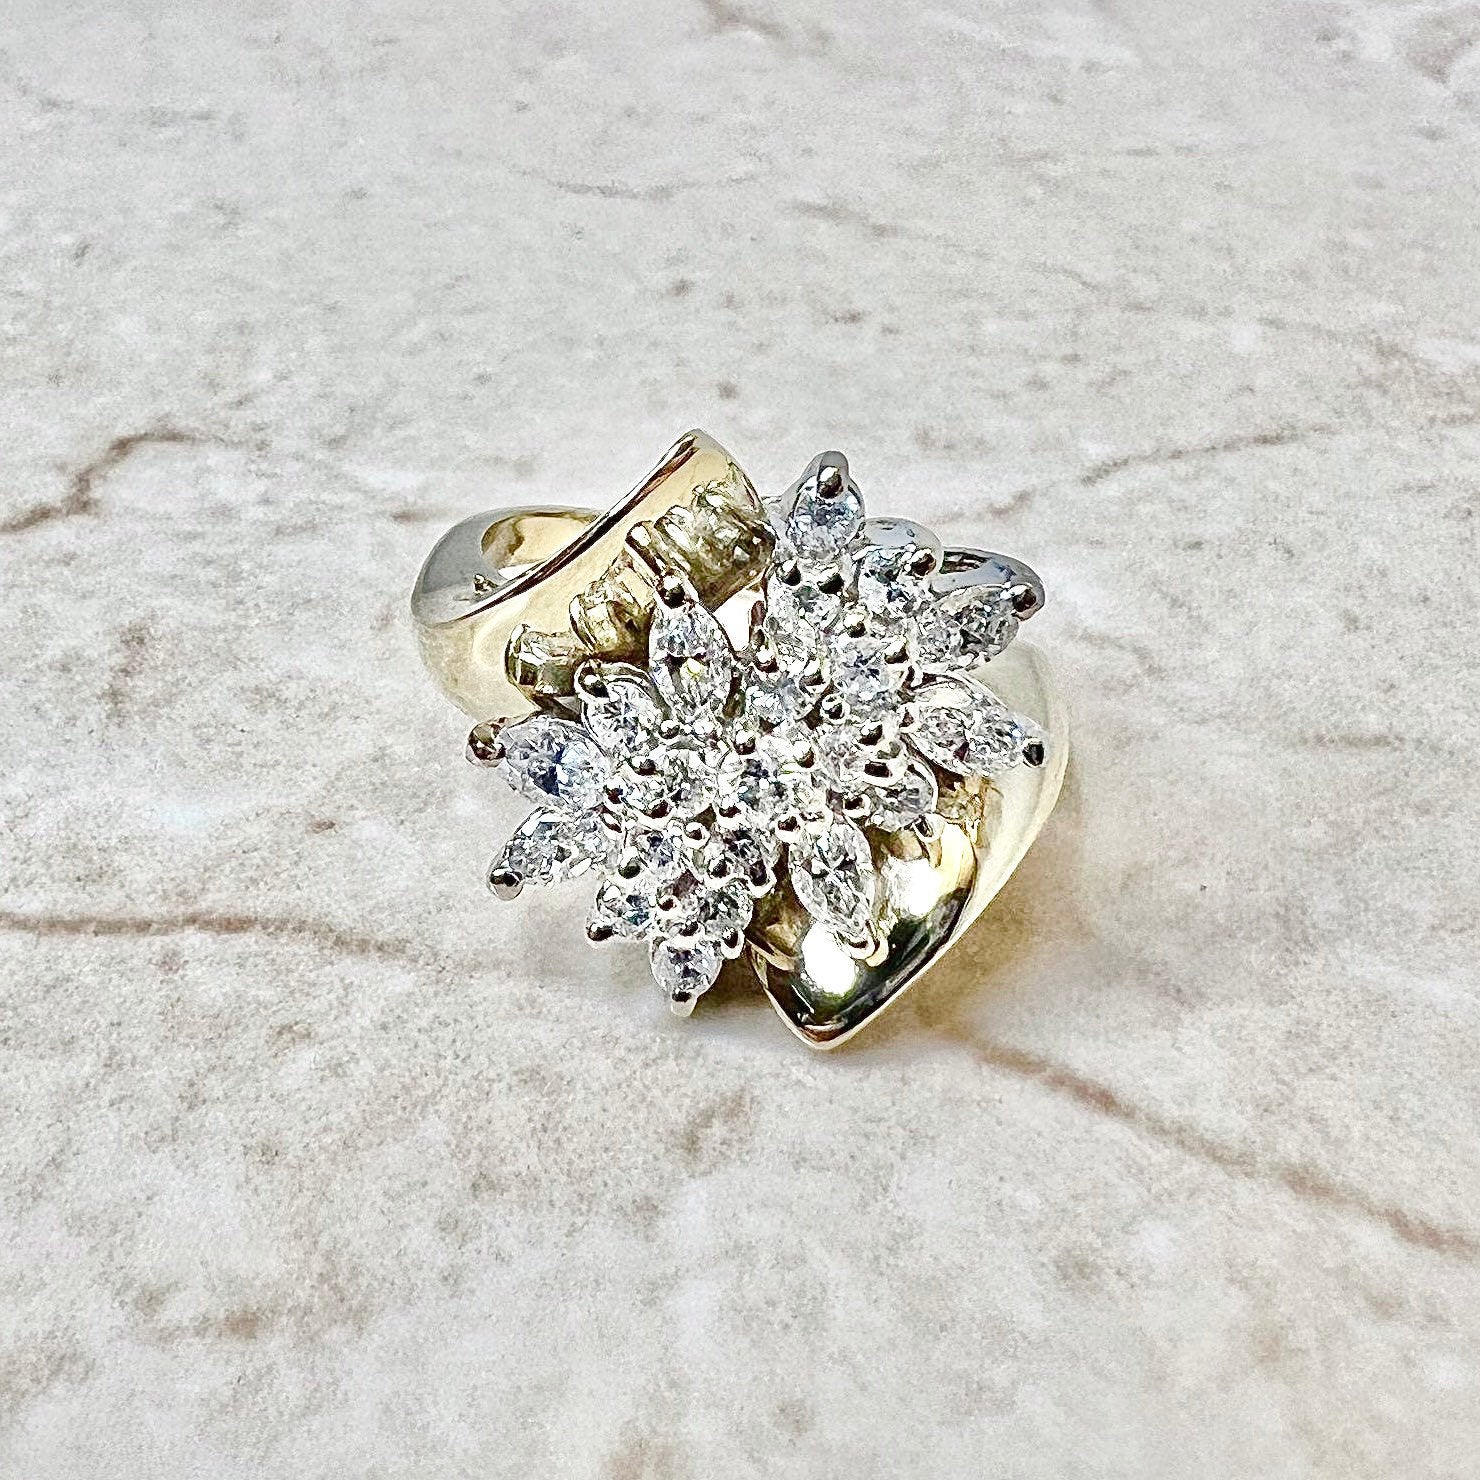 1 CTTW Vintage 14K Diamond Cluster Ring - 14 Karat Two Tone Gold Diamond Ring - Diamond Cocktail Ring - Statement Ring - Anniversary Ring